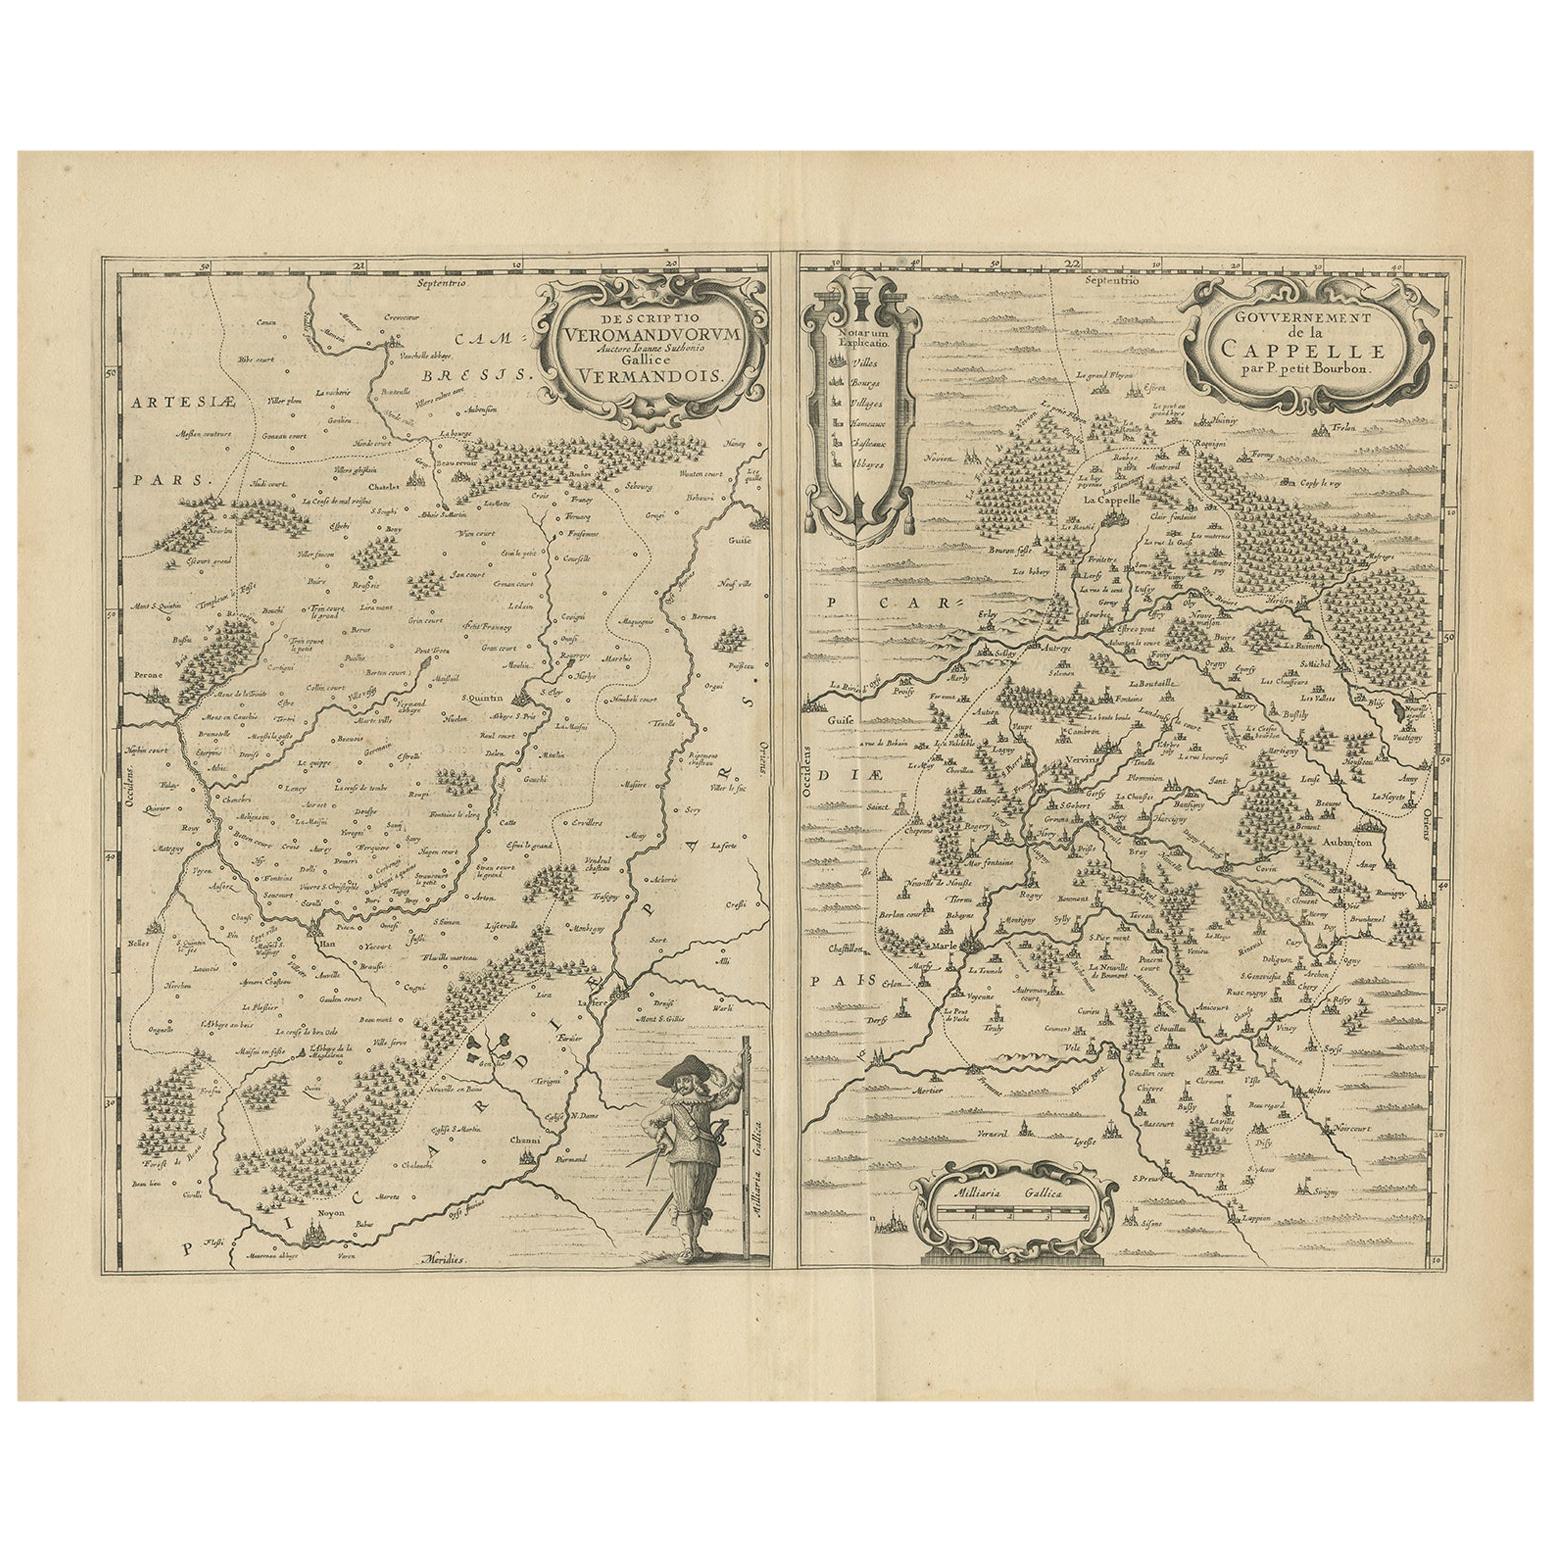 Antique Map of the Region of Vermandois and Cappelle by Janssonius, circa 1650